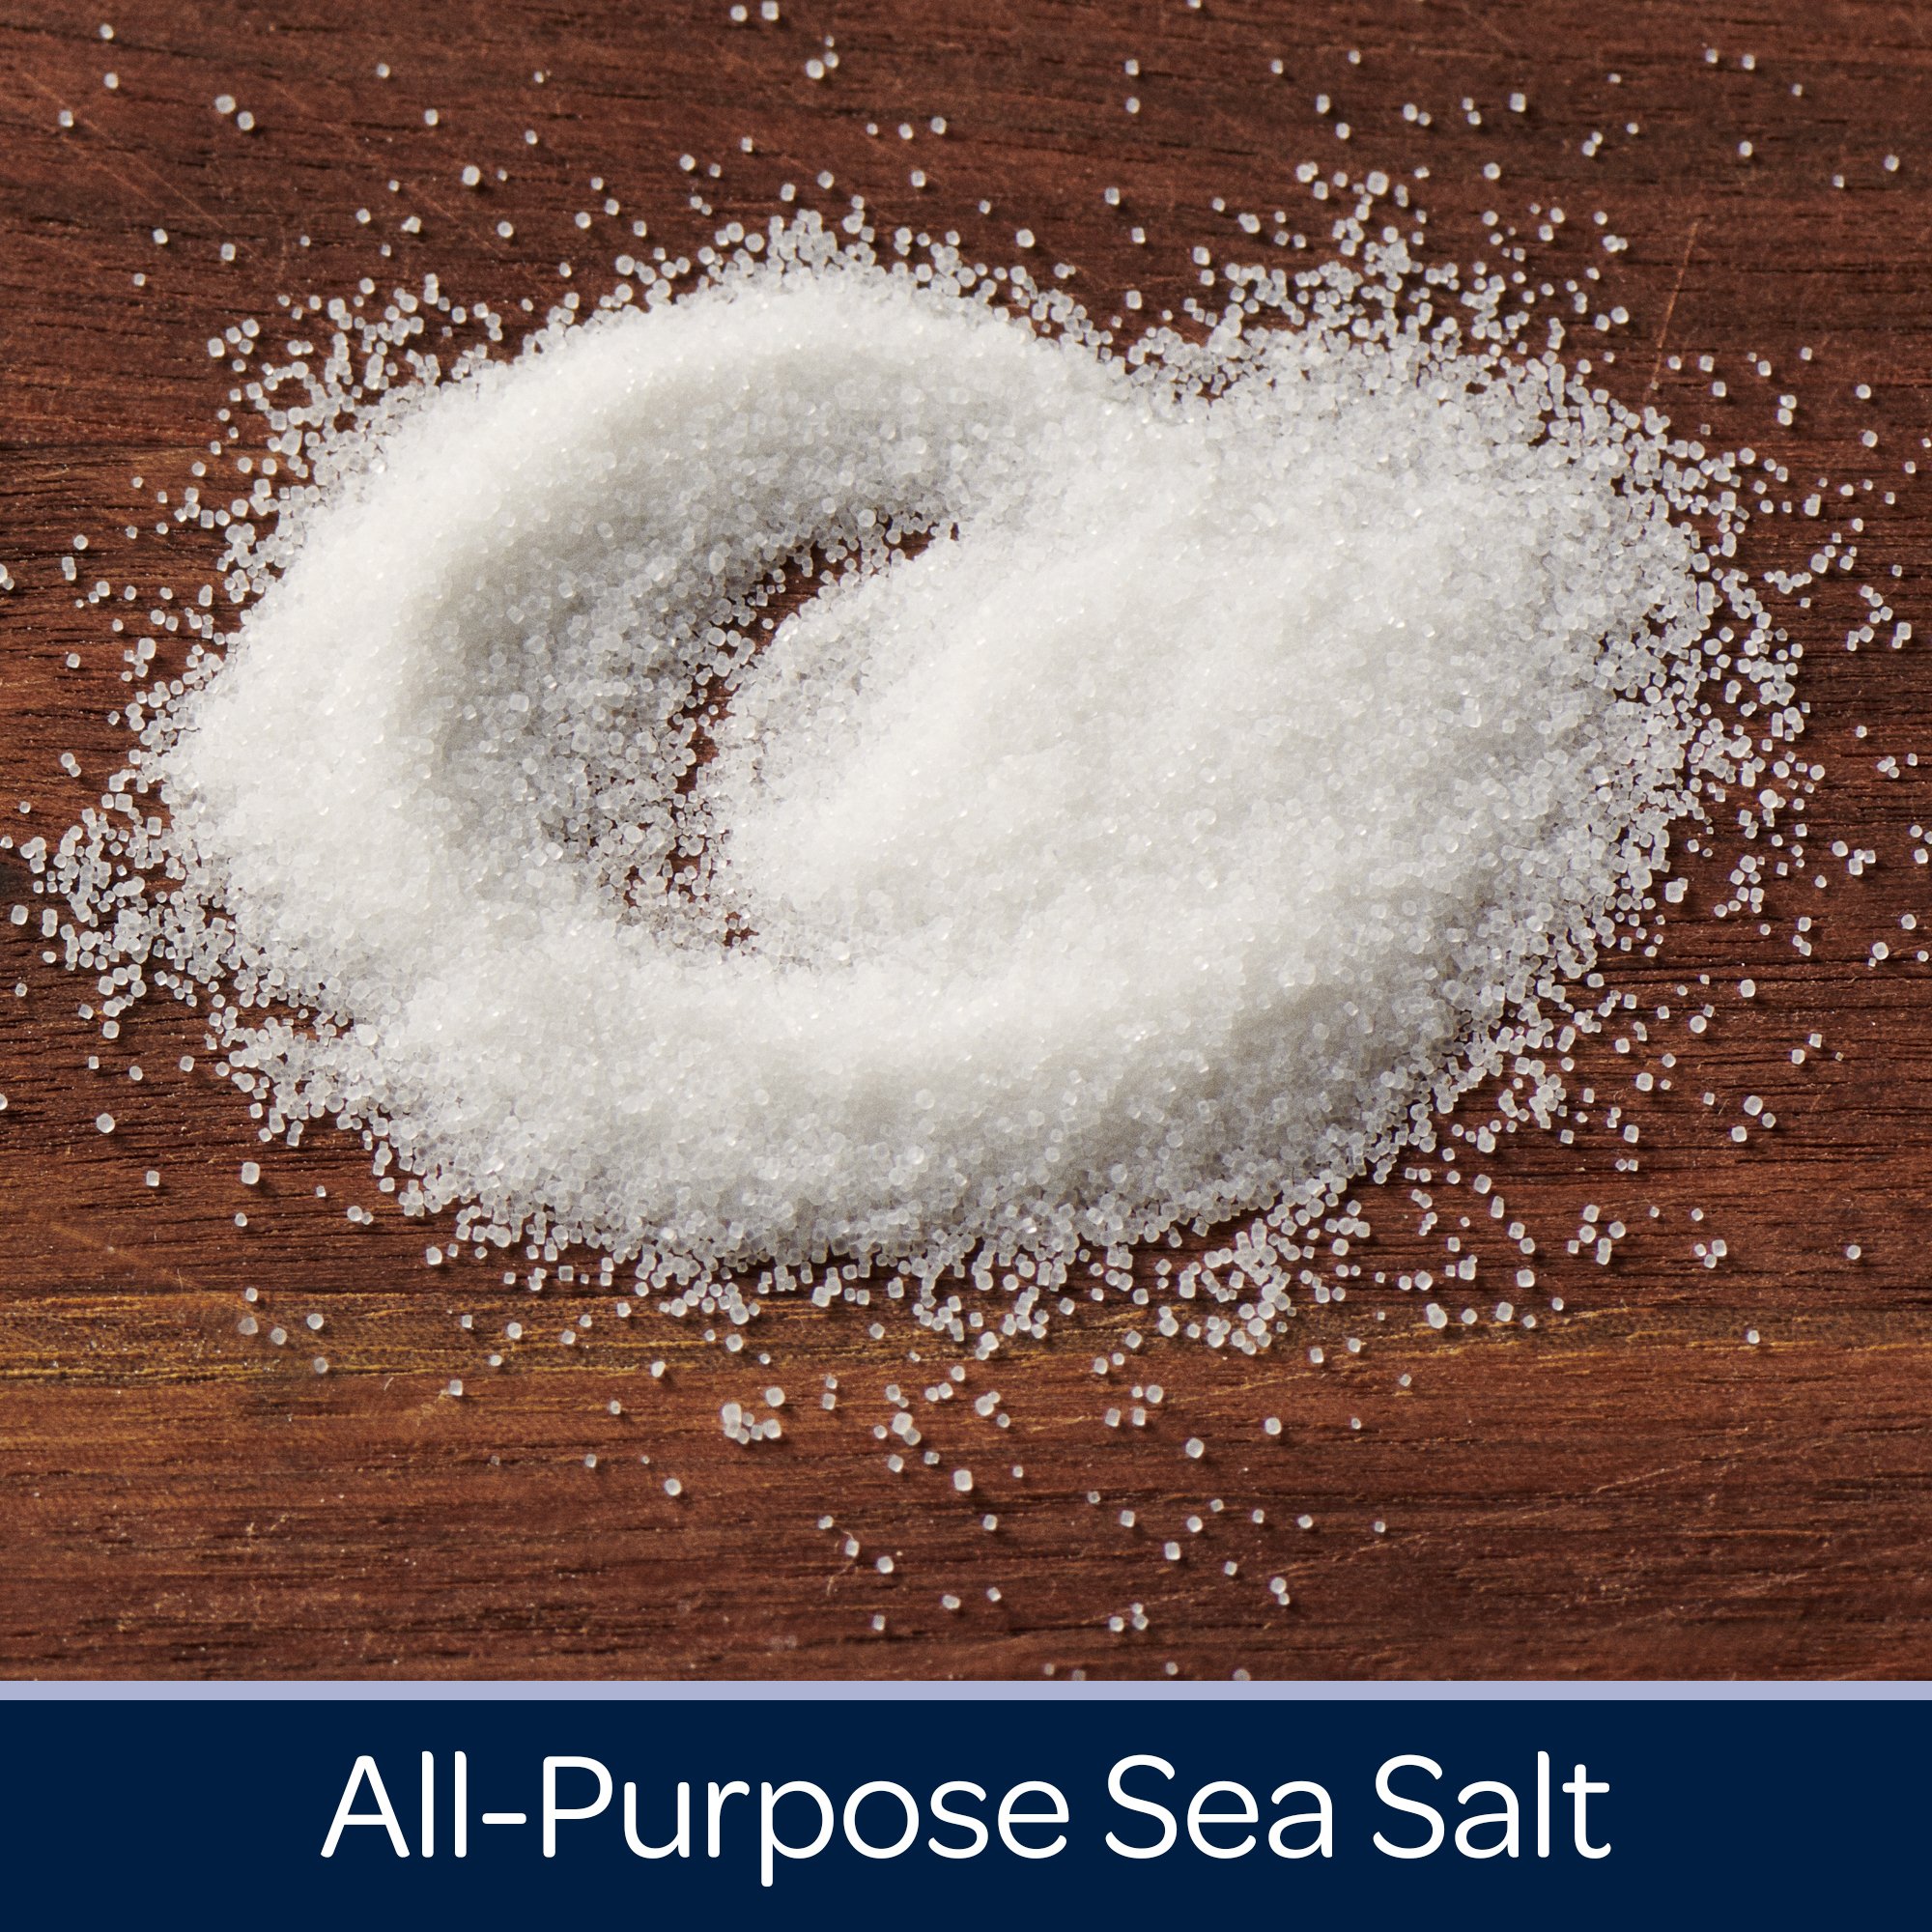 Morton Low Sodium Lite Salt - Shop Herbs & Spices at H-E-B